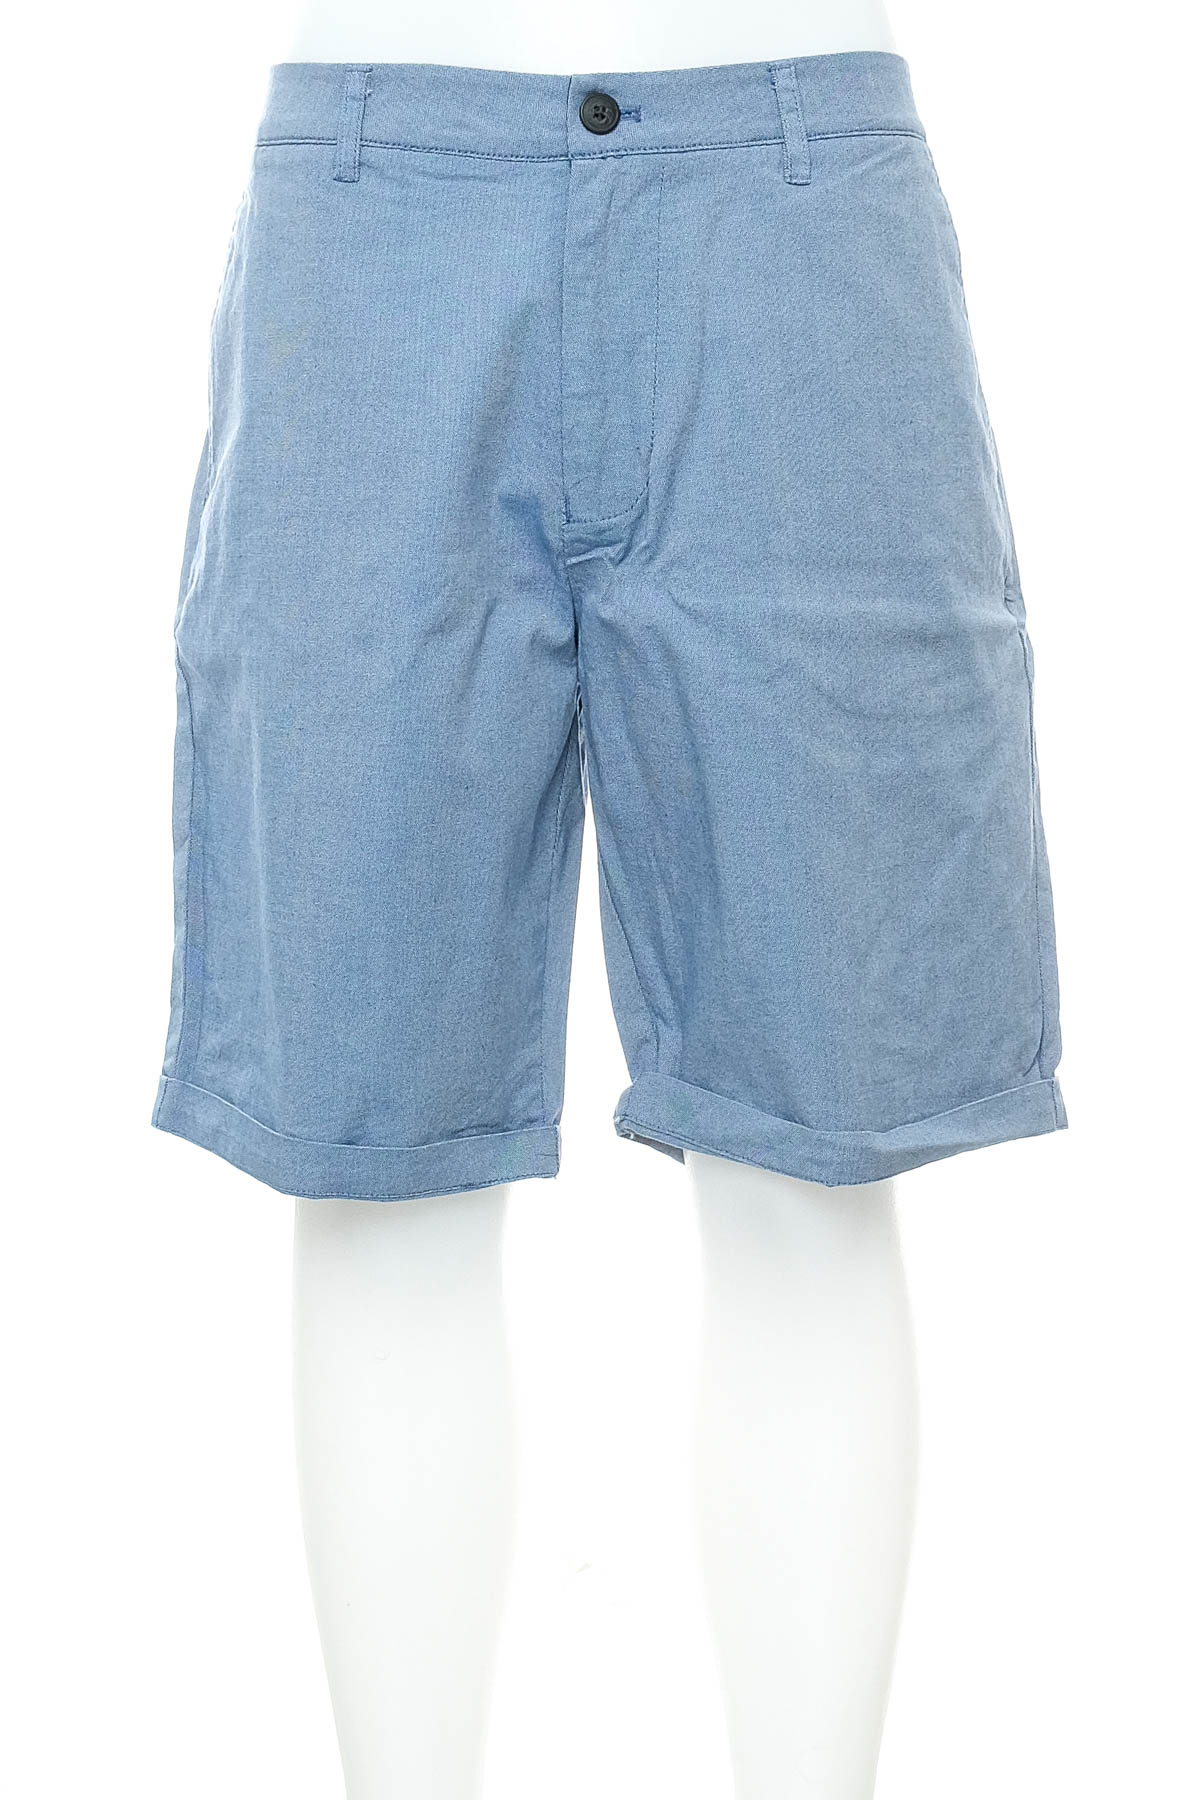 Men's shorts - CONNOR - 0